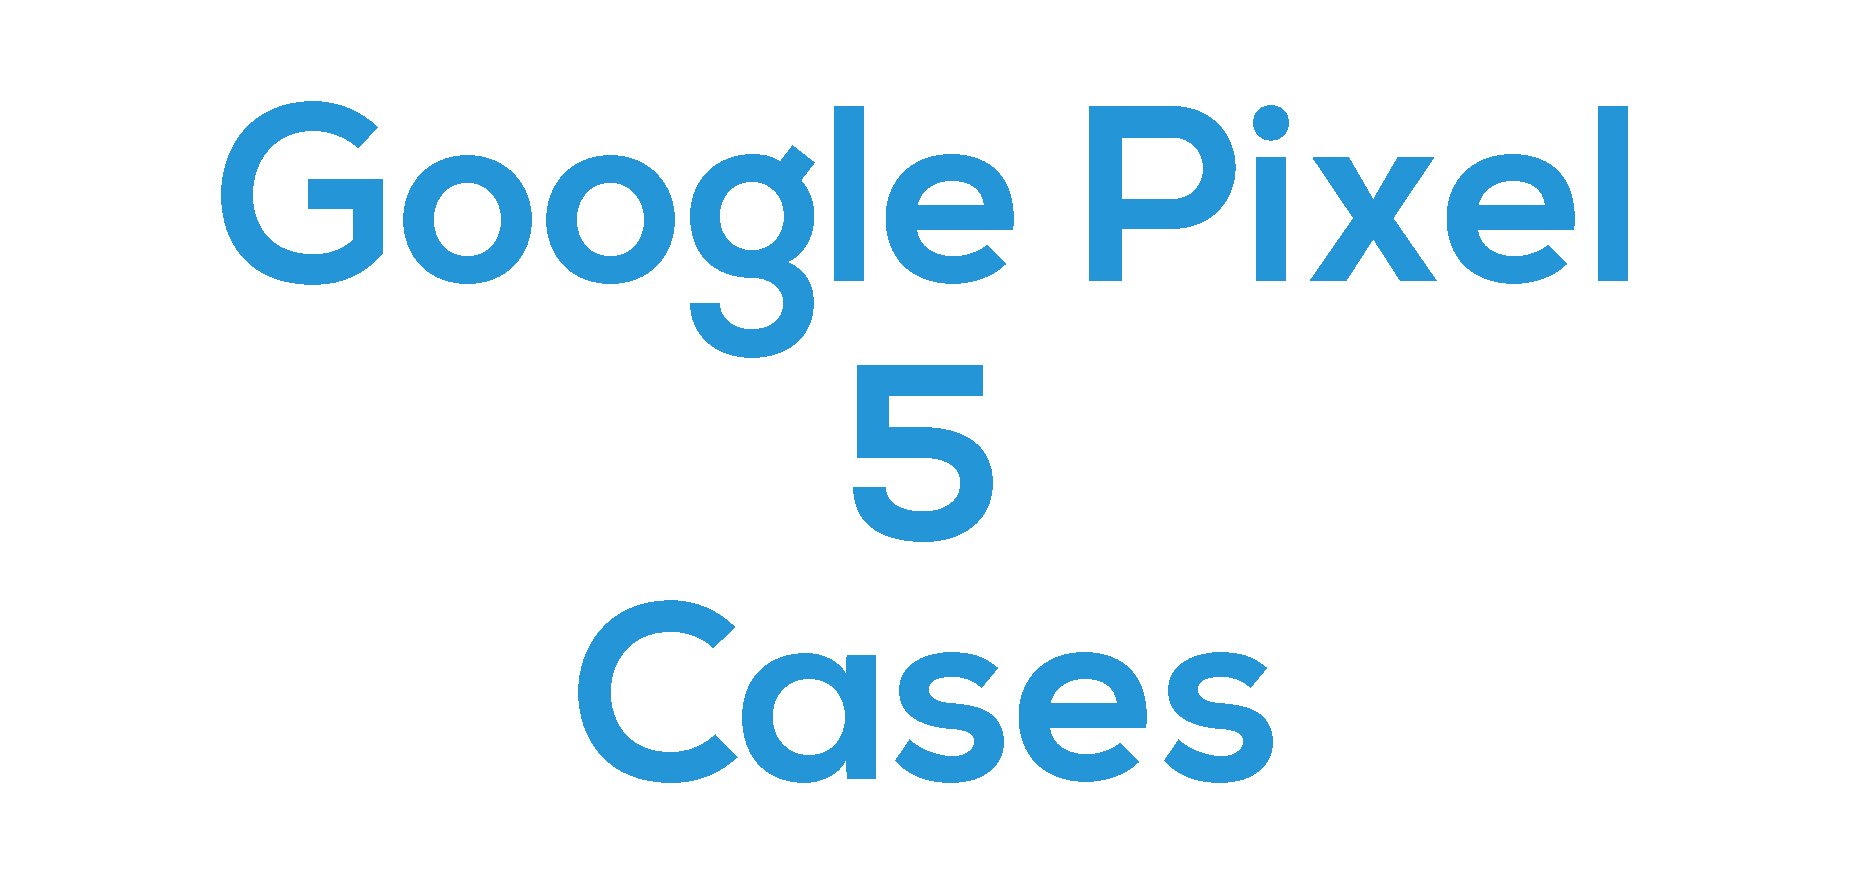 Google Pixel 5 Cases